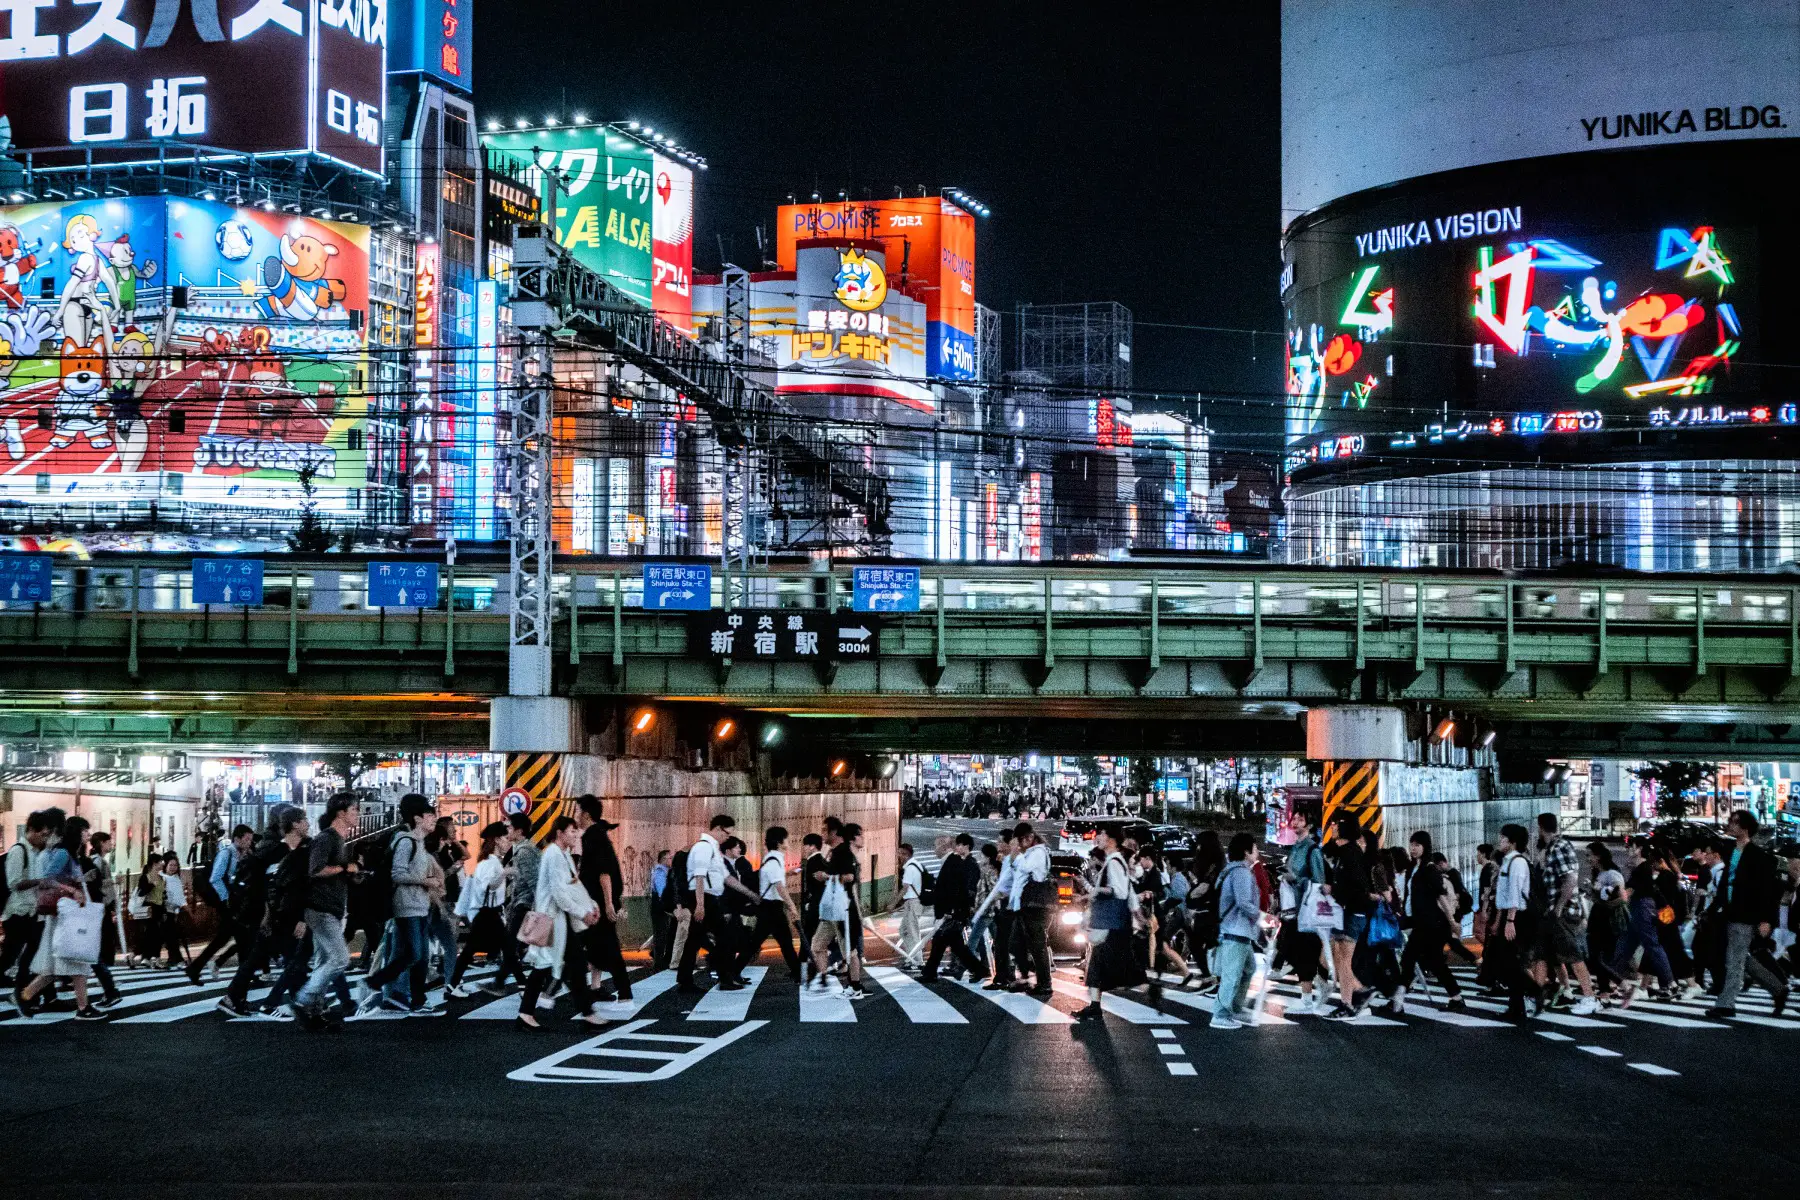 A busy crossing at Shinjuku during nighttime rush hour